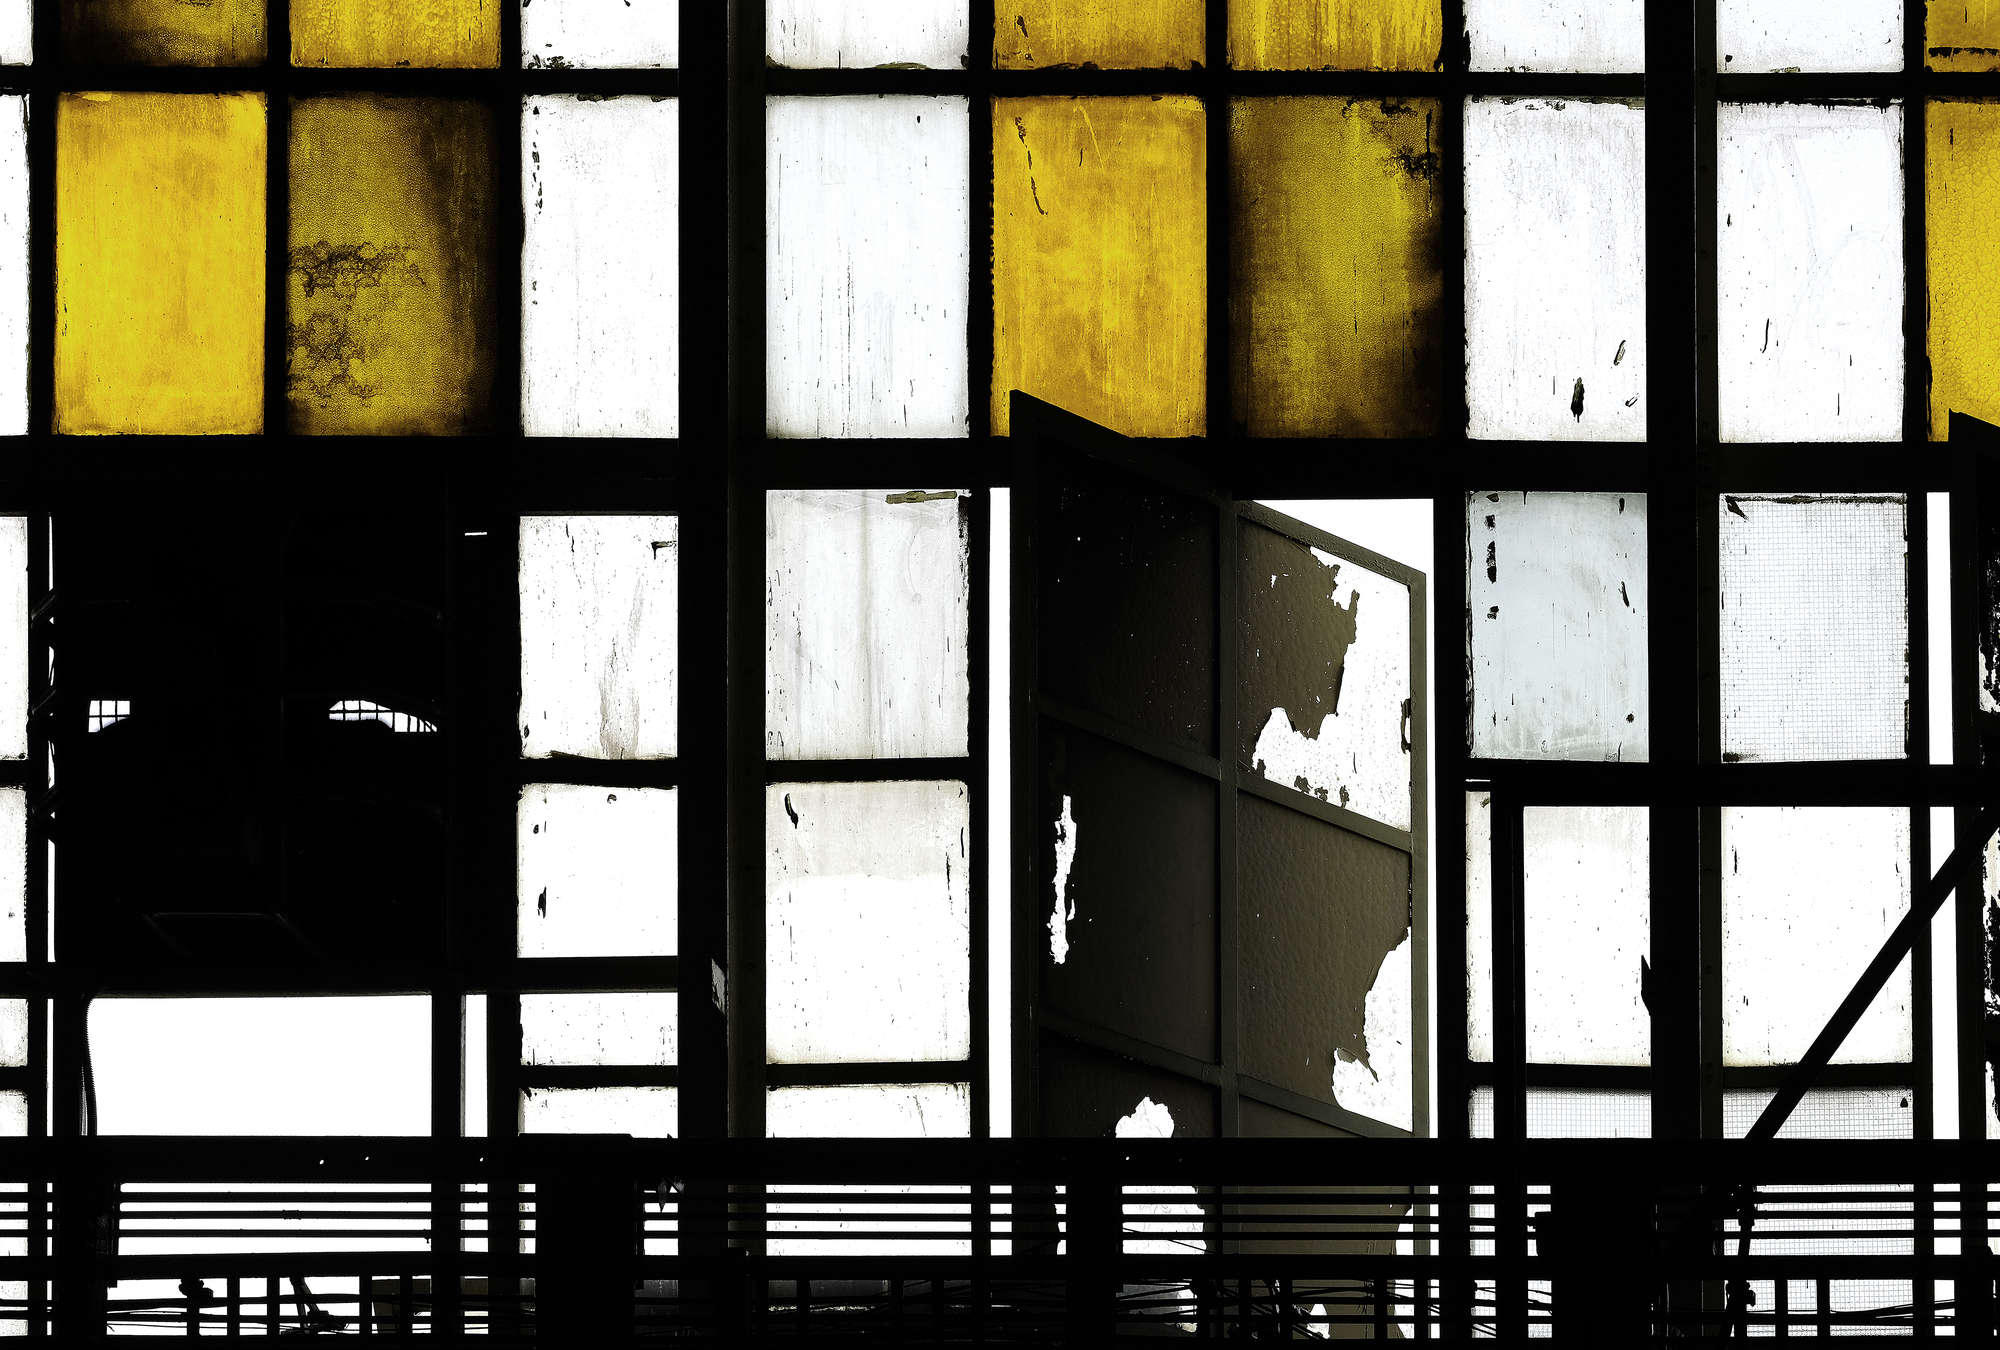             Bronx 1 - Fotomurali, Loft con vetrate - Giallo, nero | Pile liscio premium
        